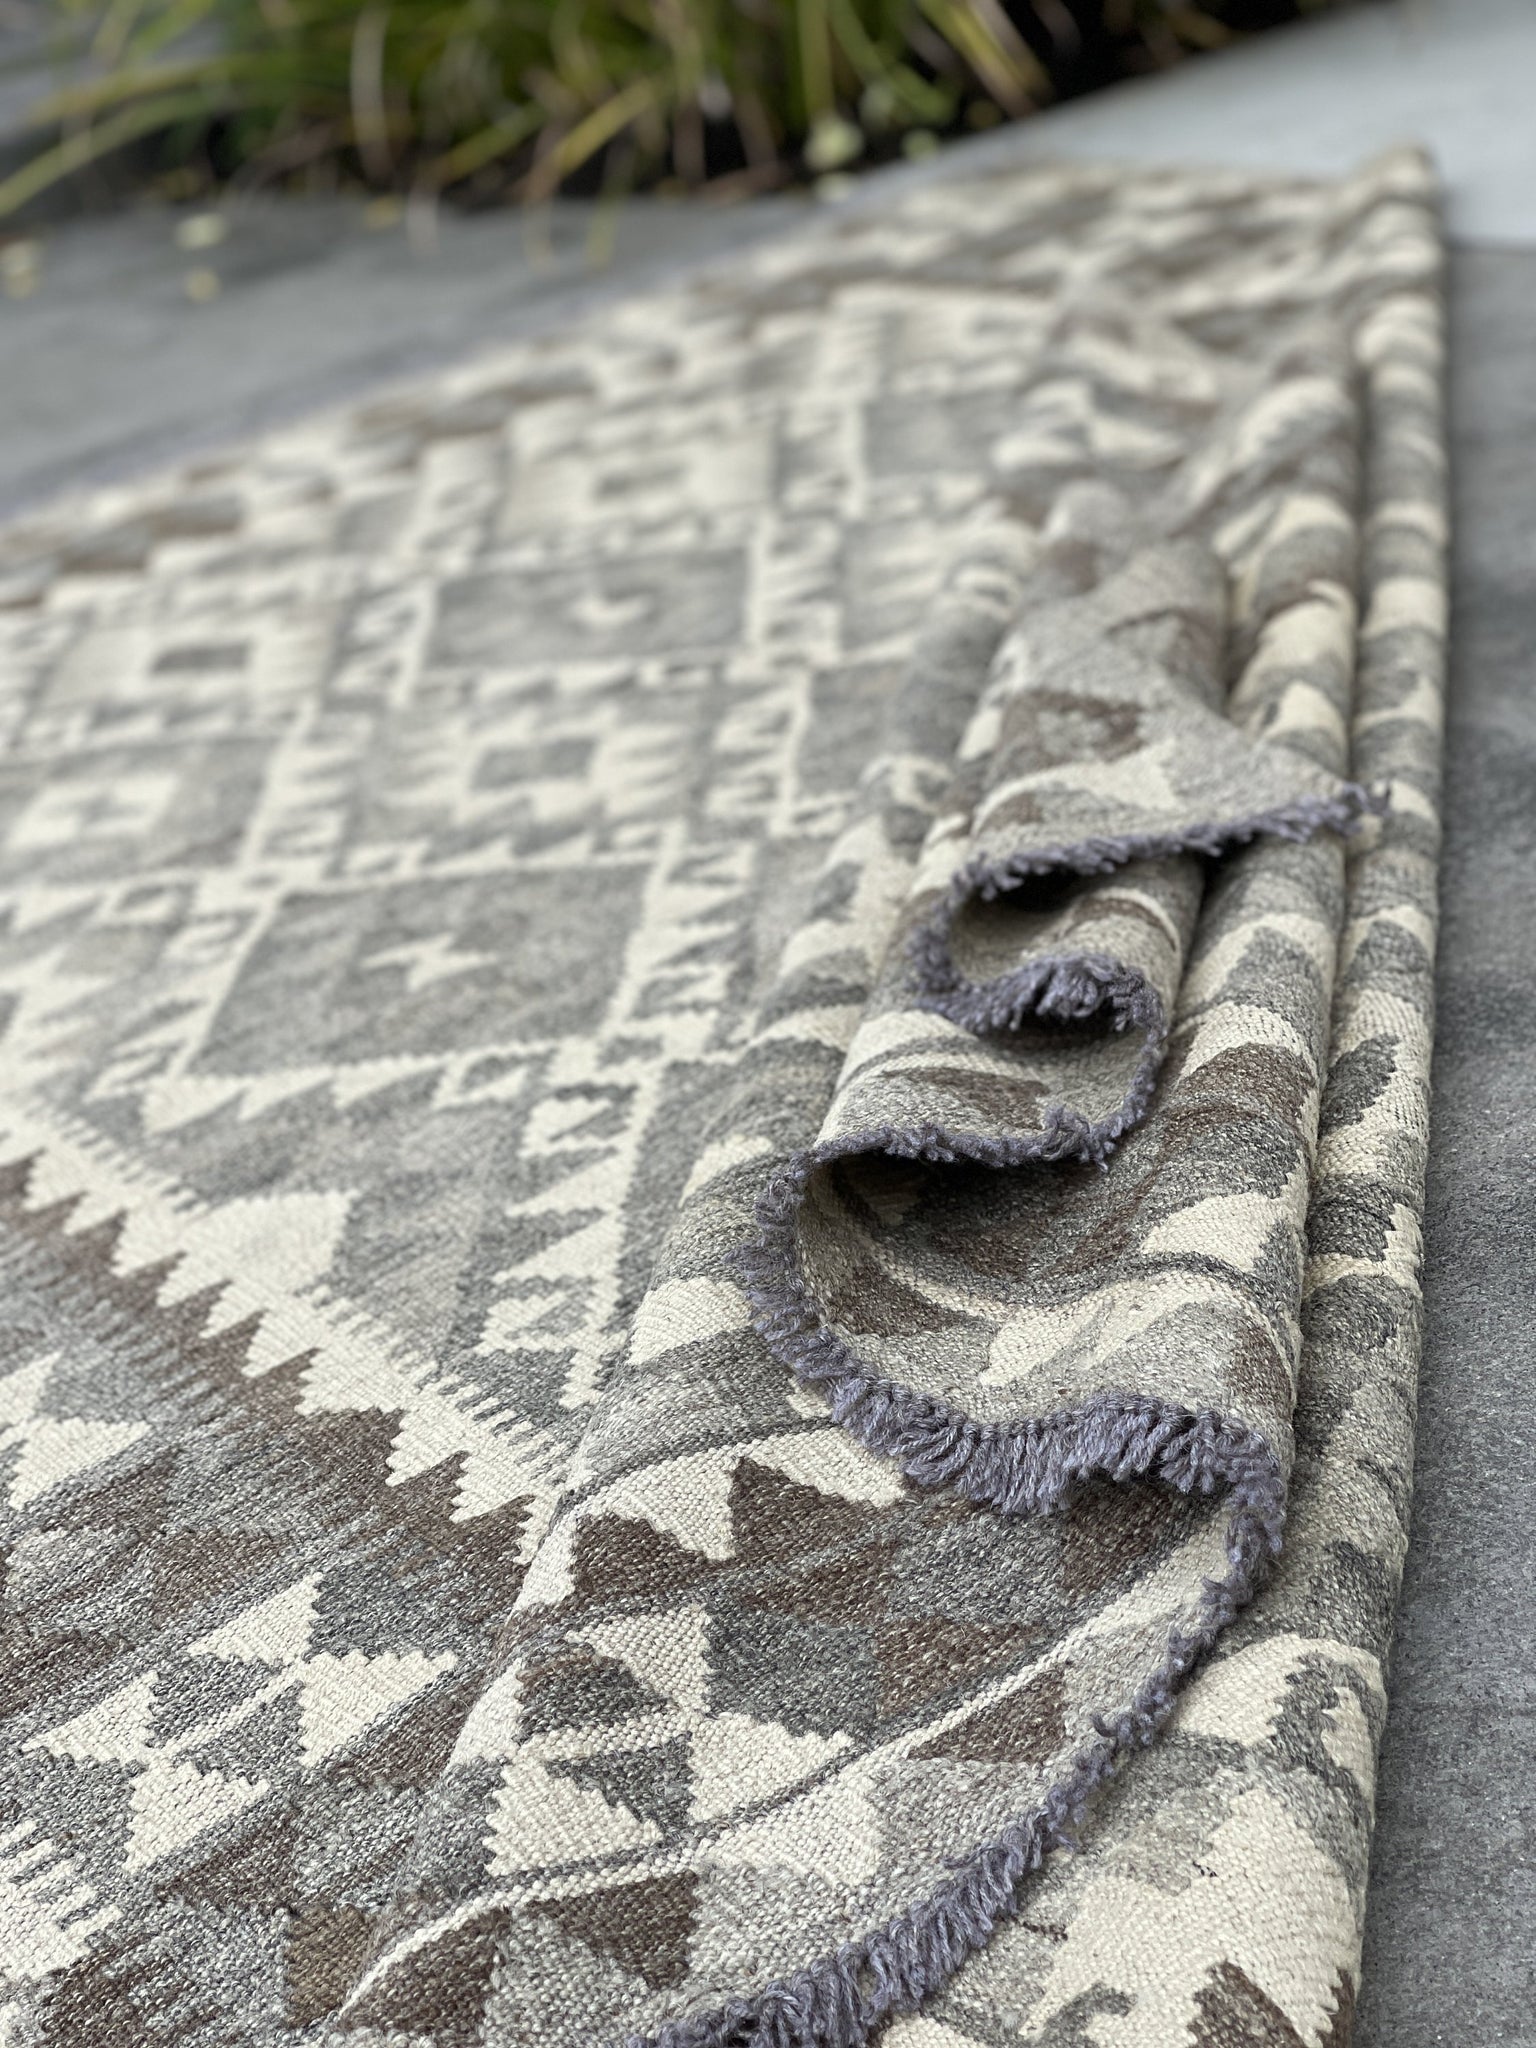 5x7 (150x200) Handmade Kilim Afghan Rug | Light Grey Gray Ivory Brown Neutral | Flatweave Tribal Nomadic Turkish Moroccan Outdoor Wool